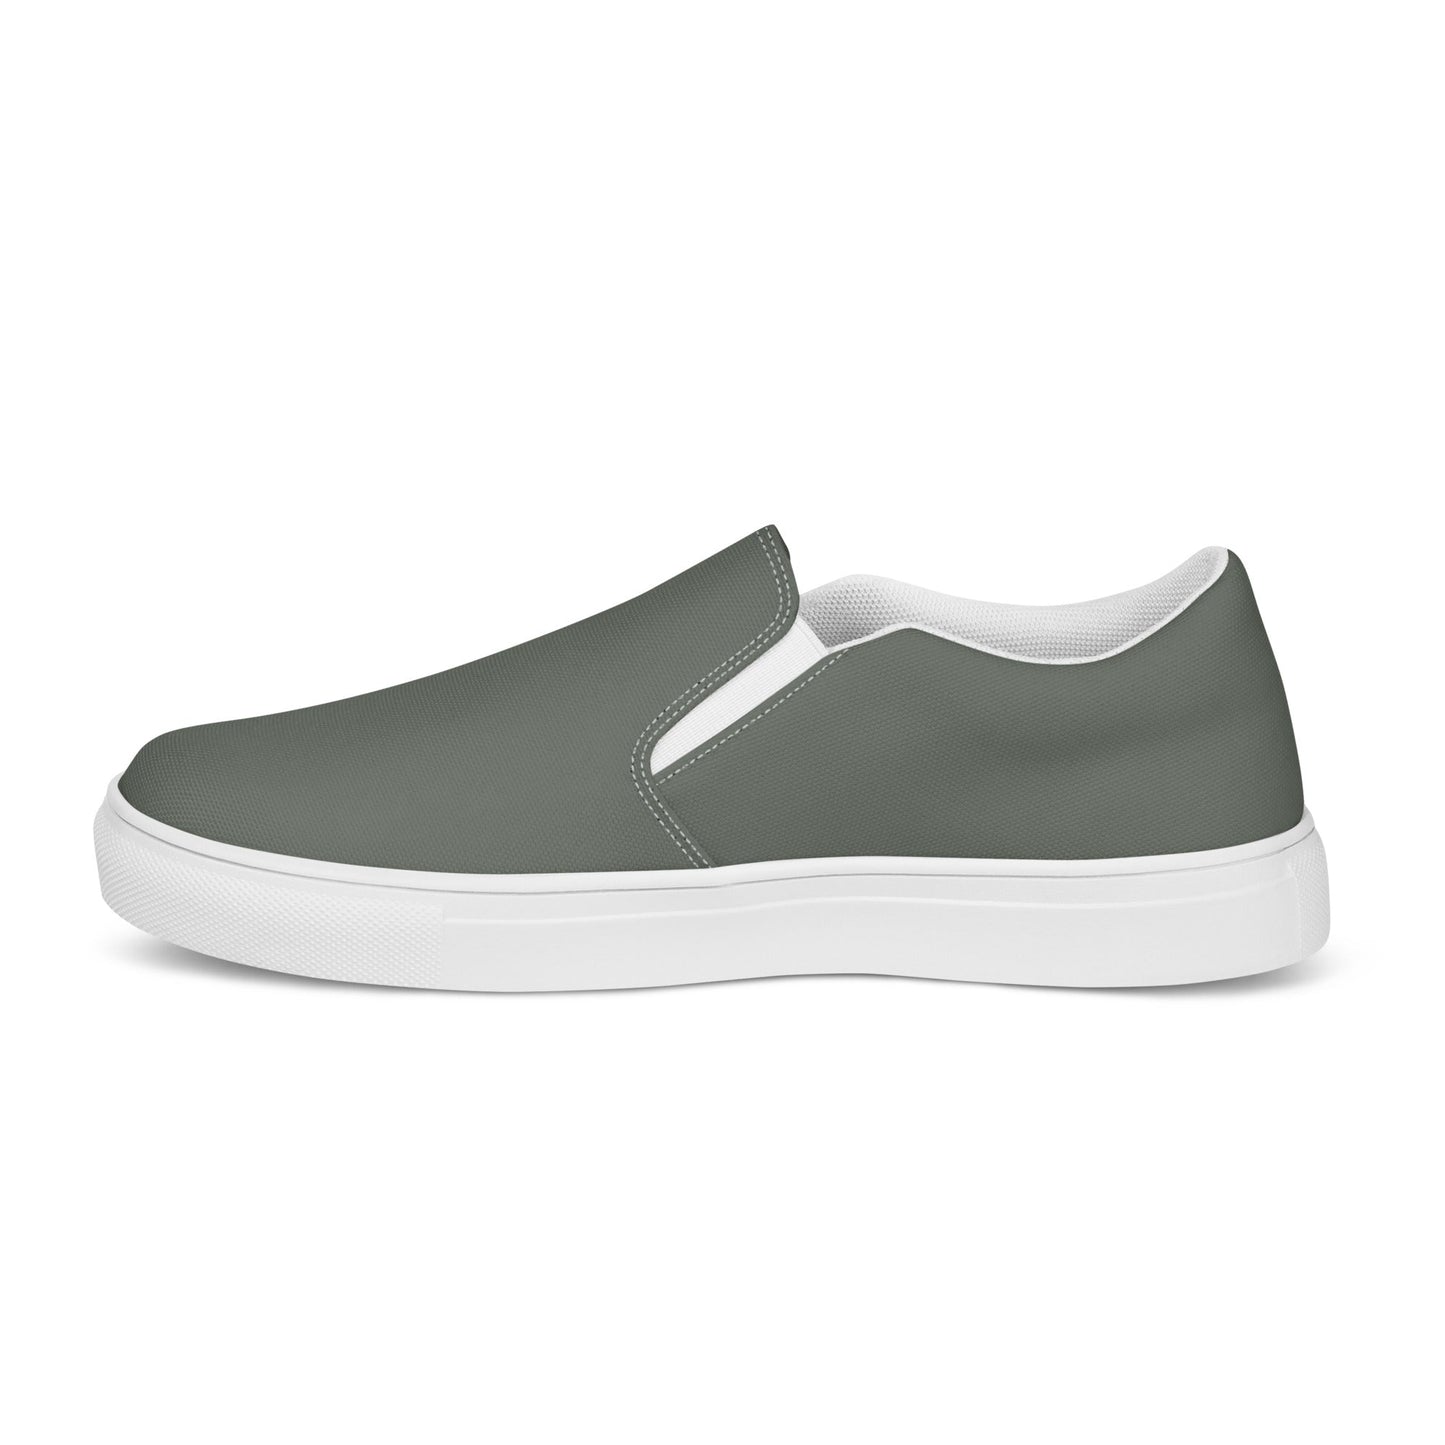 klasneakers Men’s slip-on canvas shoes - Olive Drab Gray